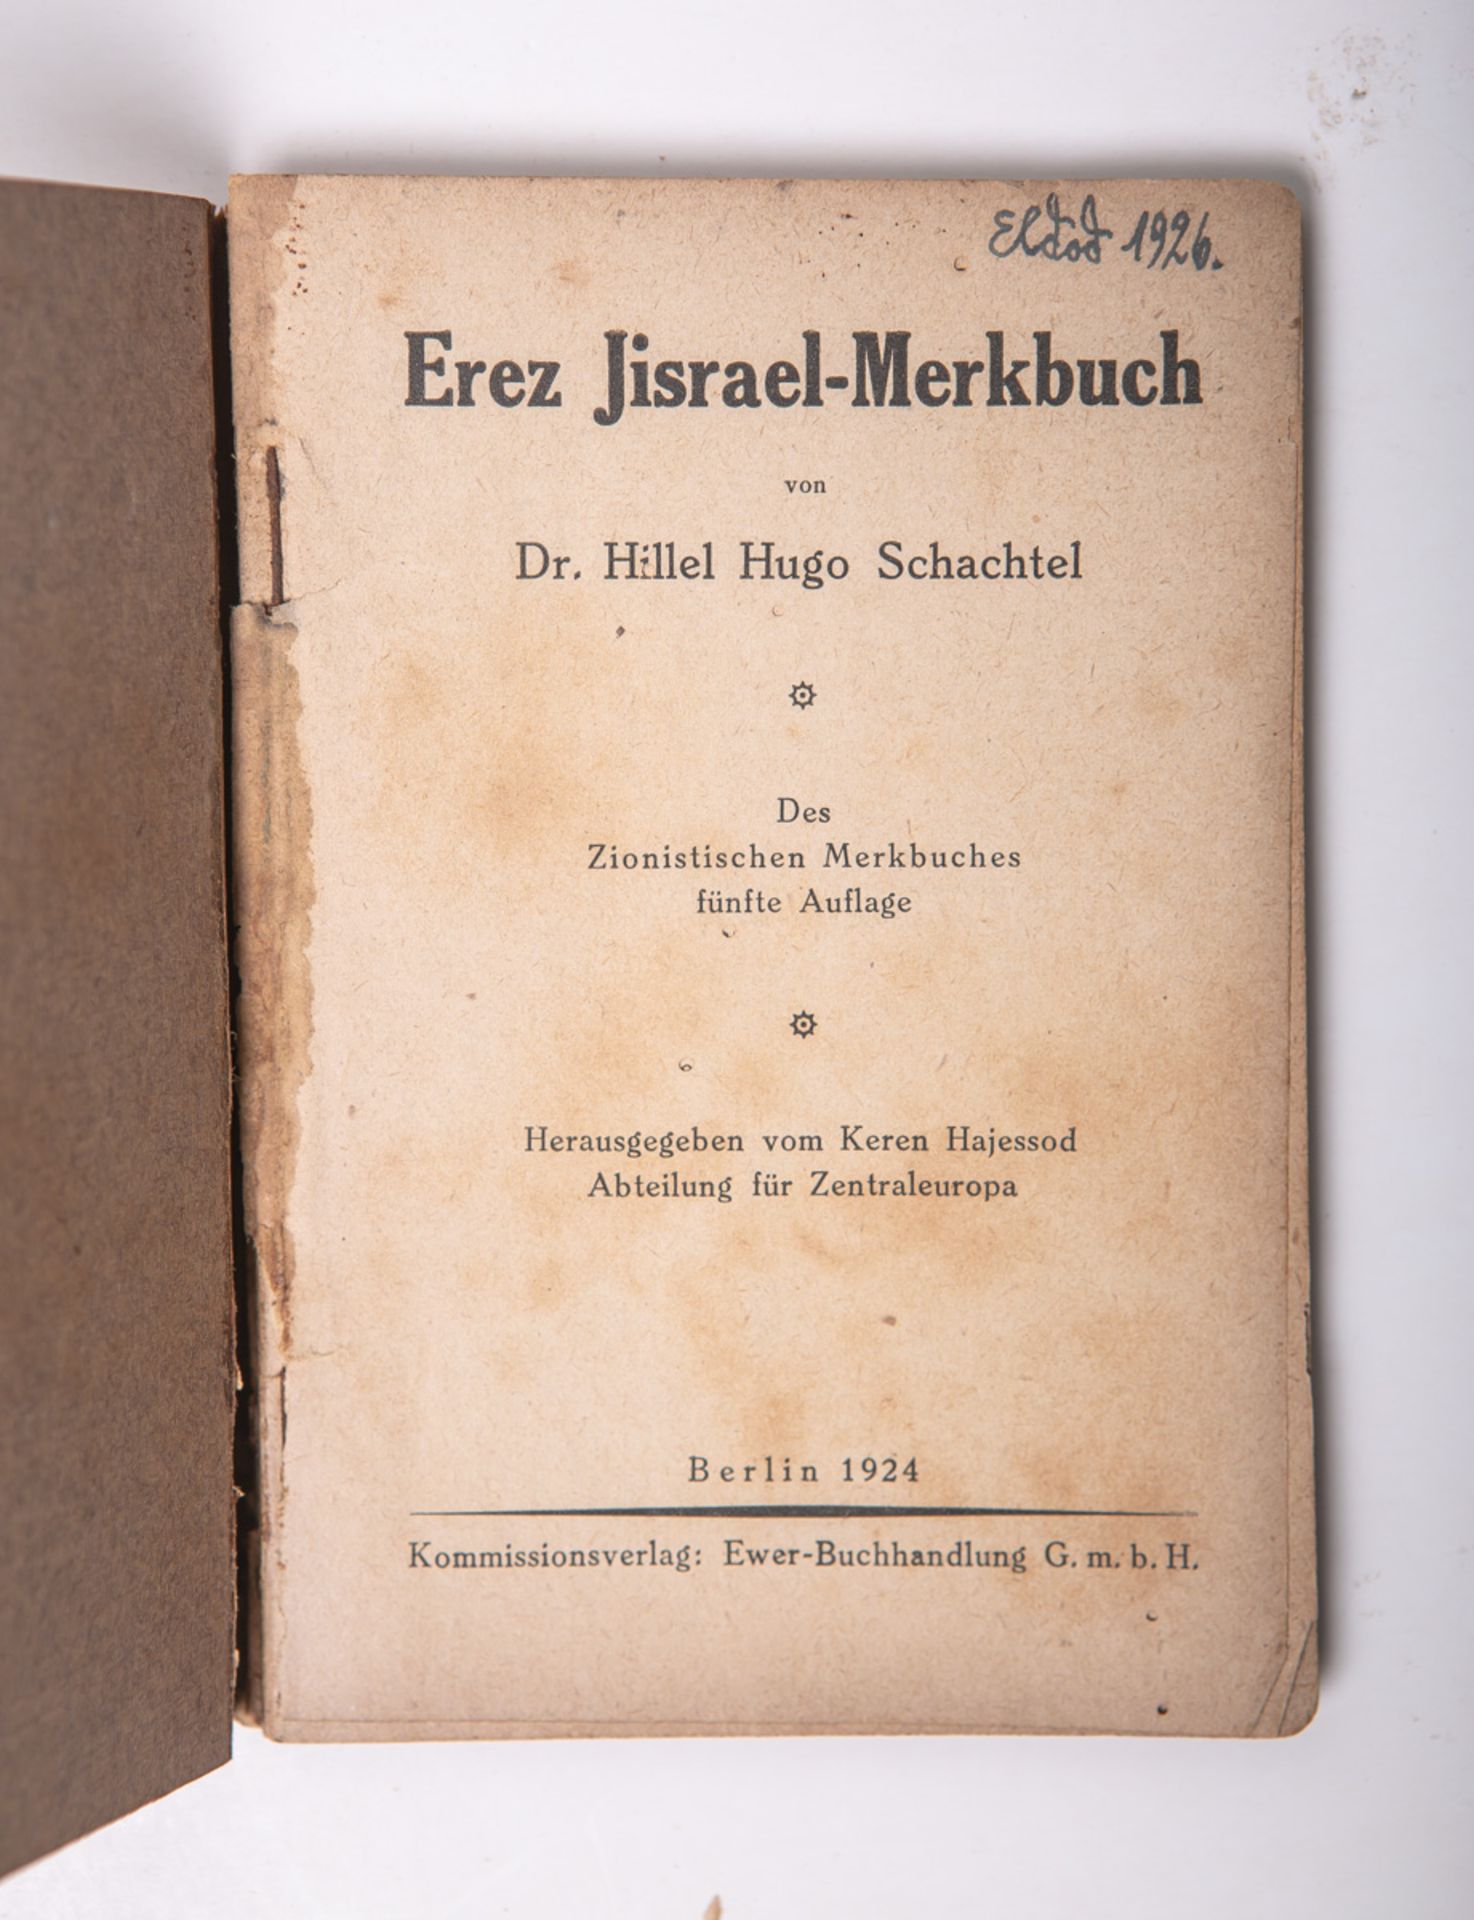 Schachtel, Dr. Hillel Hugo, "Erez Jisrael-Merkbuch" - Image 2 of 2